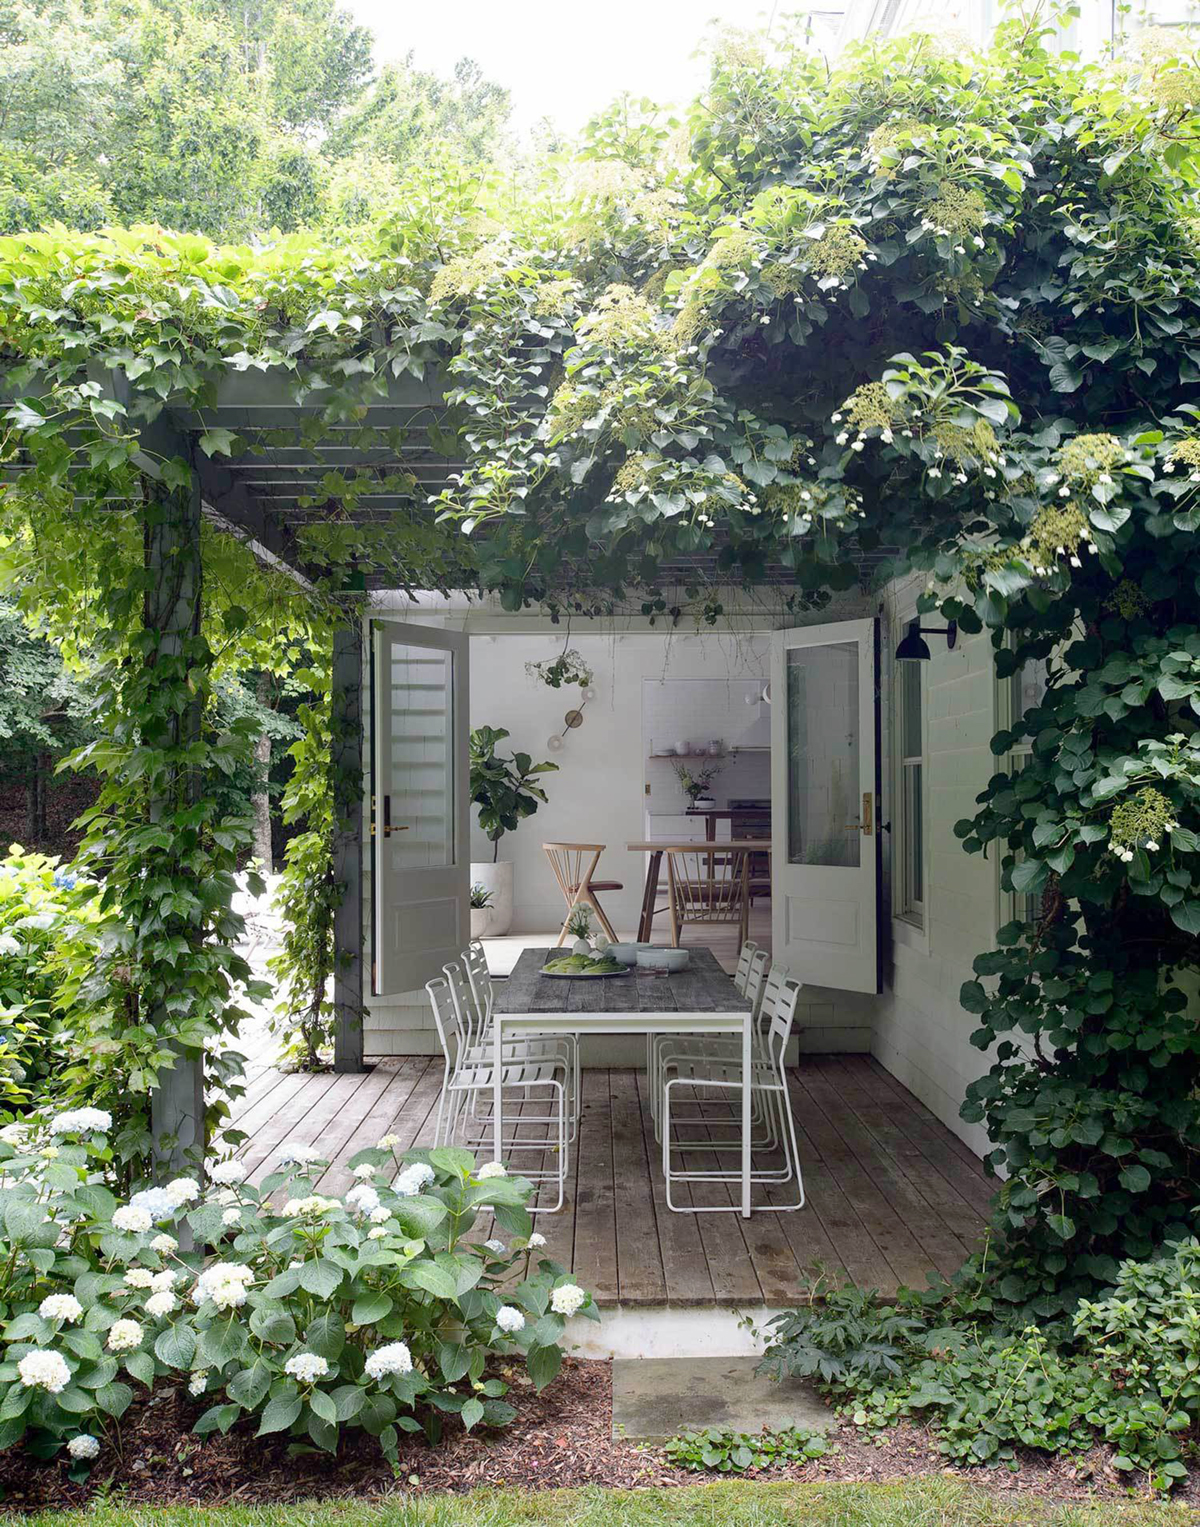 Choosing a style of patio doors for garden room